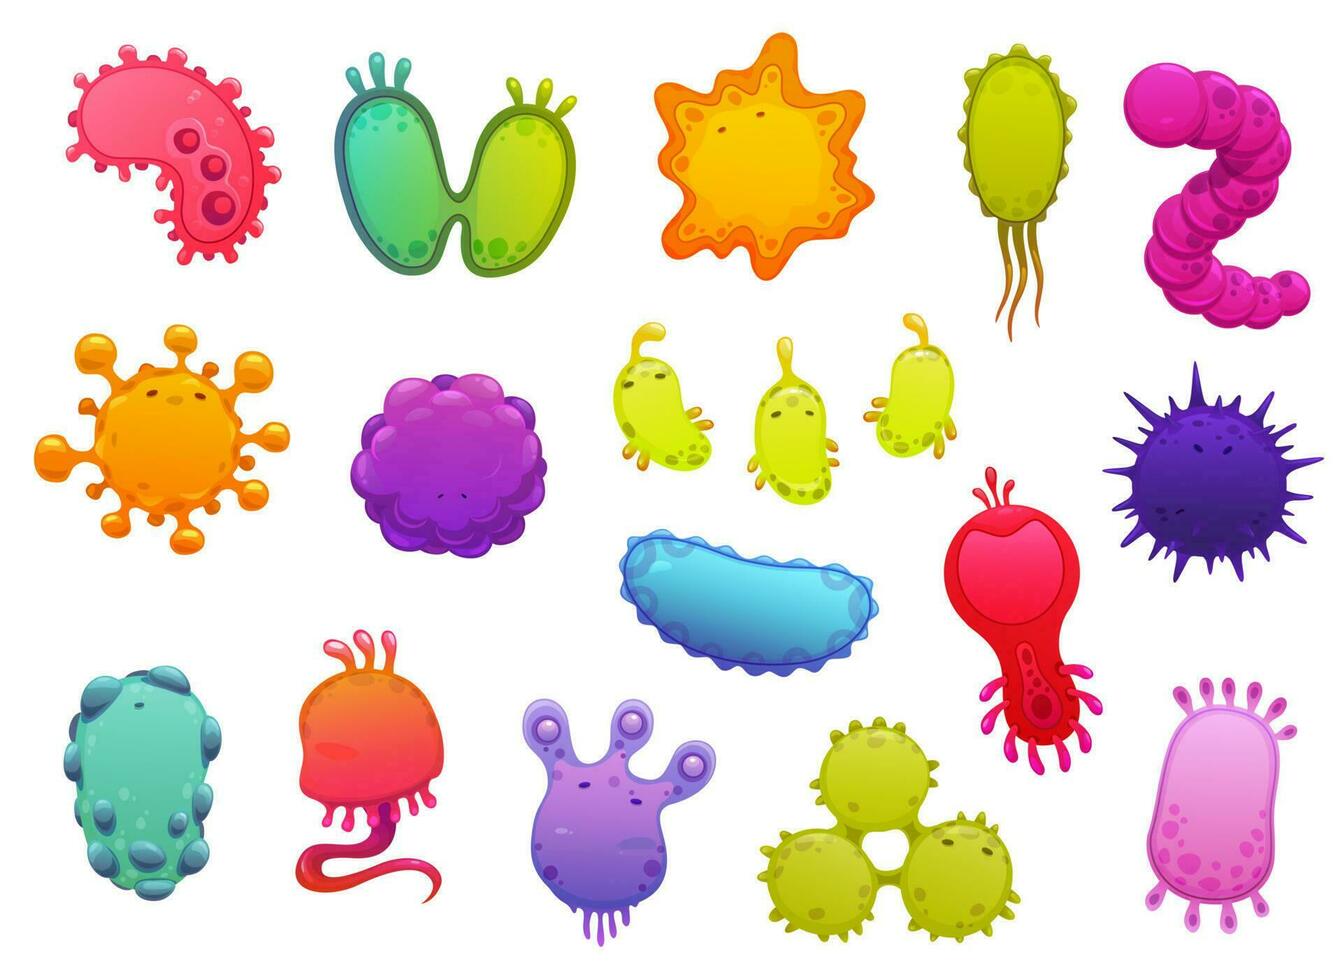 Microbes, viruses and coronavirus pathogen vector